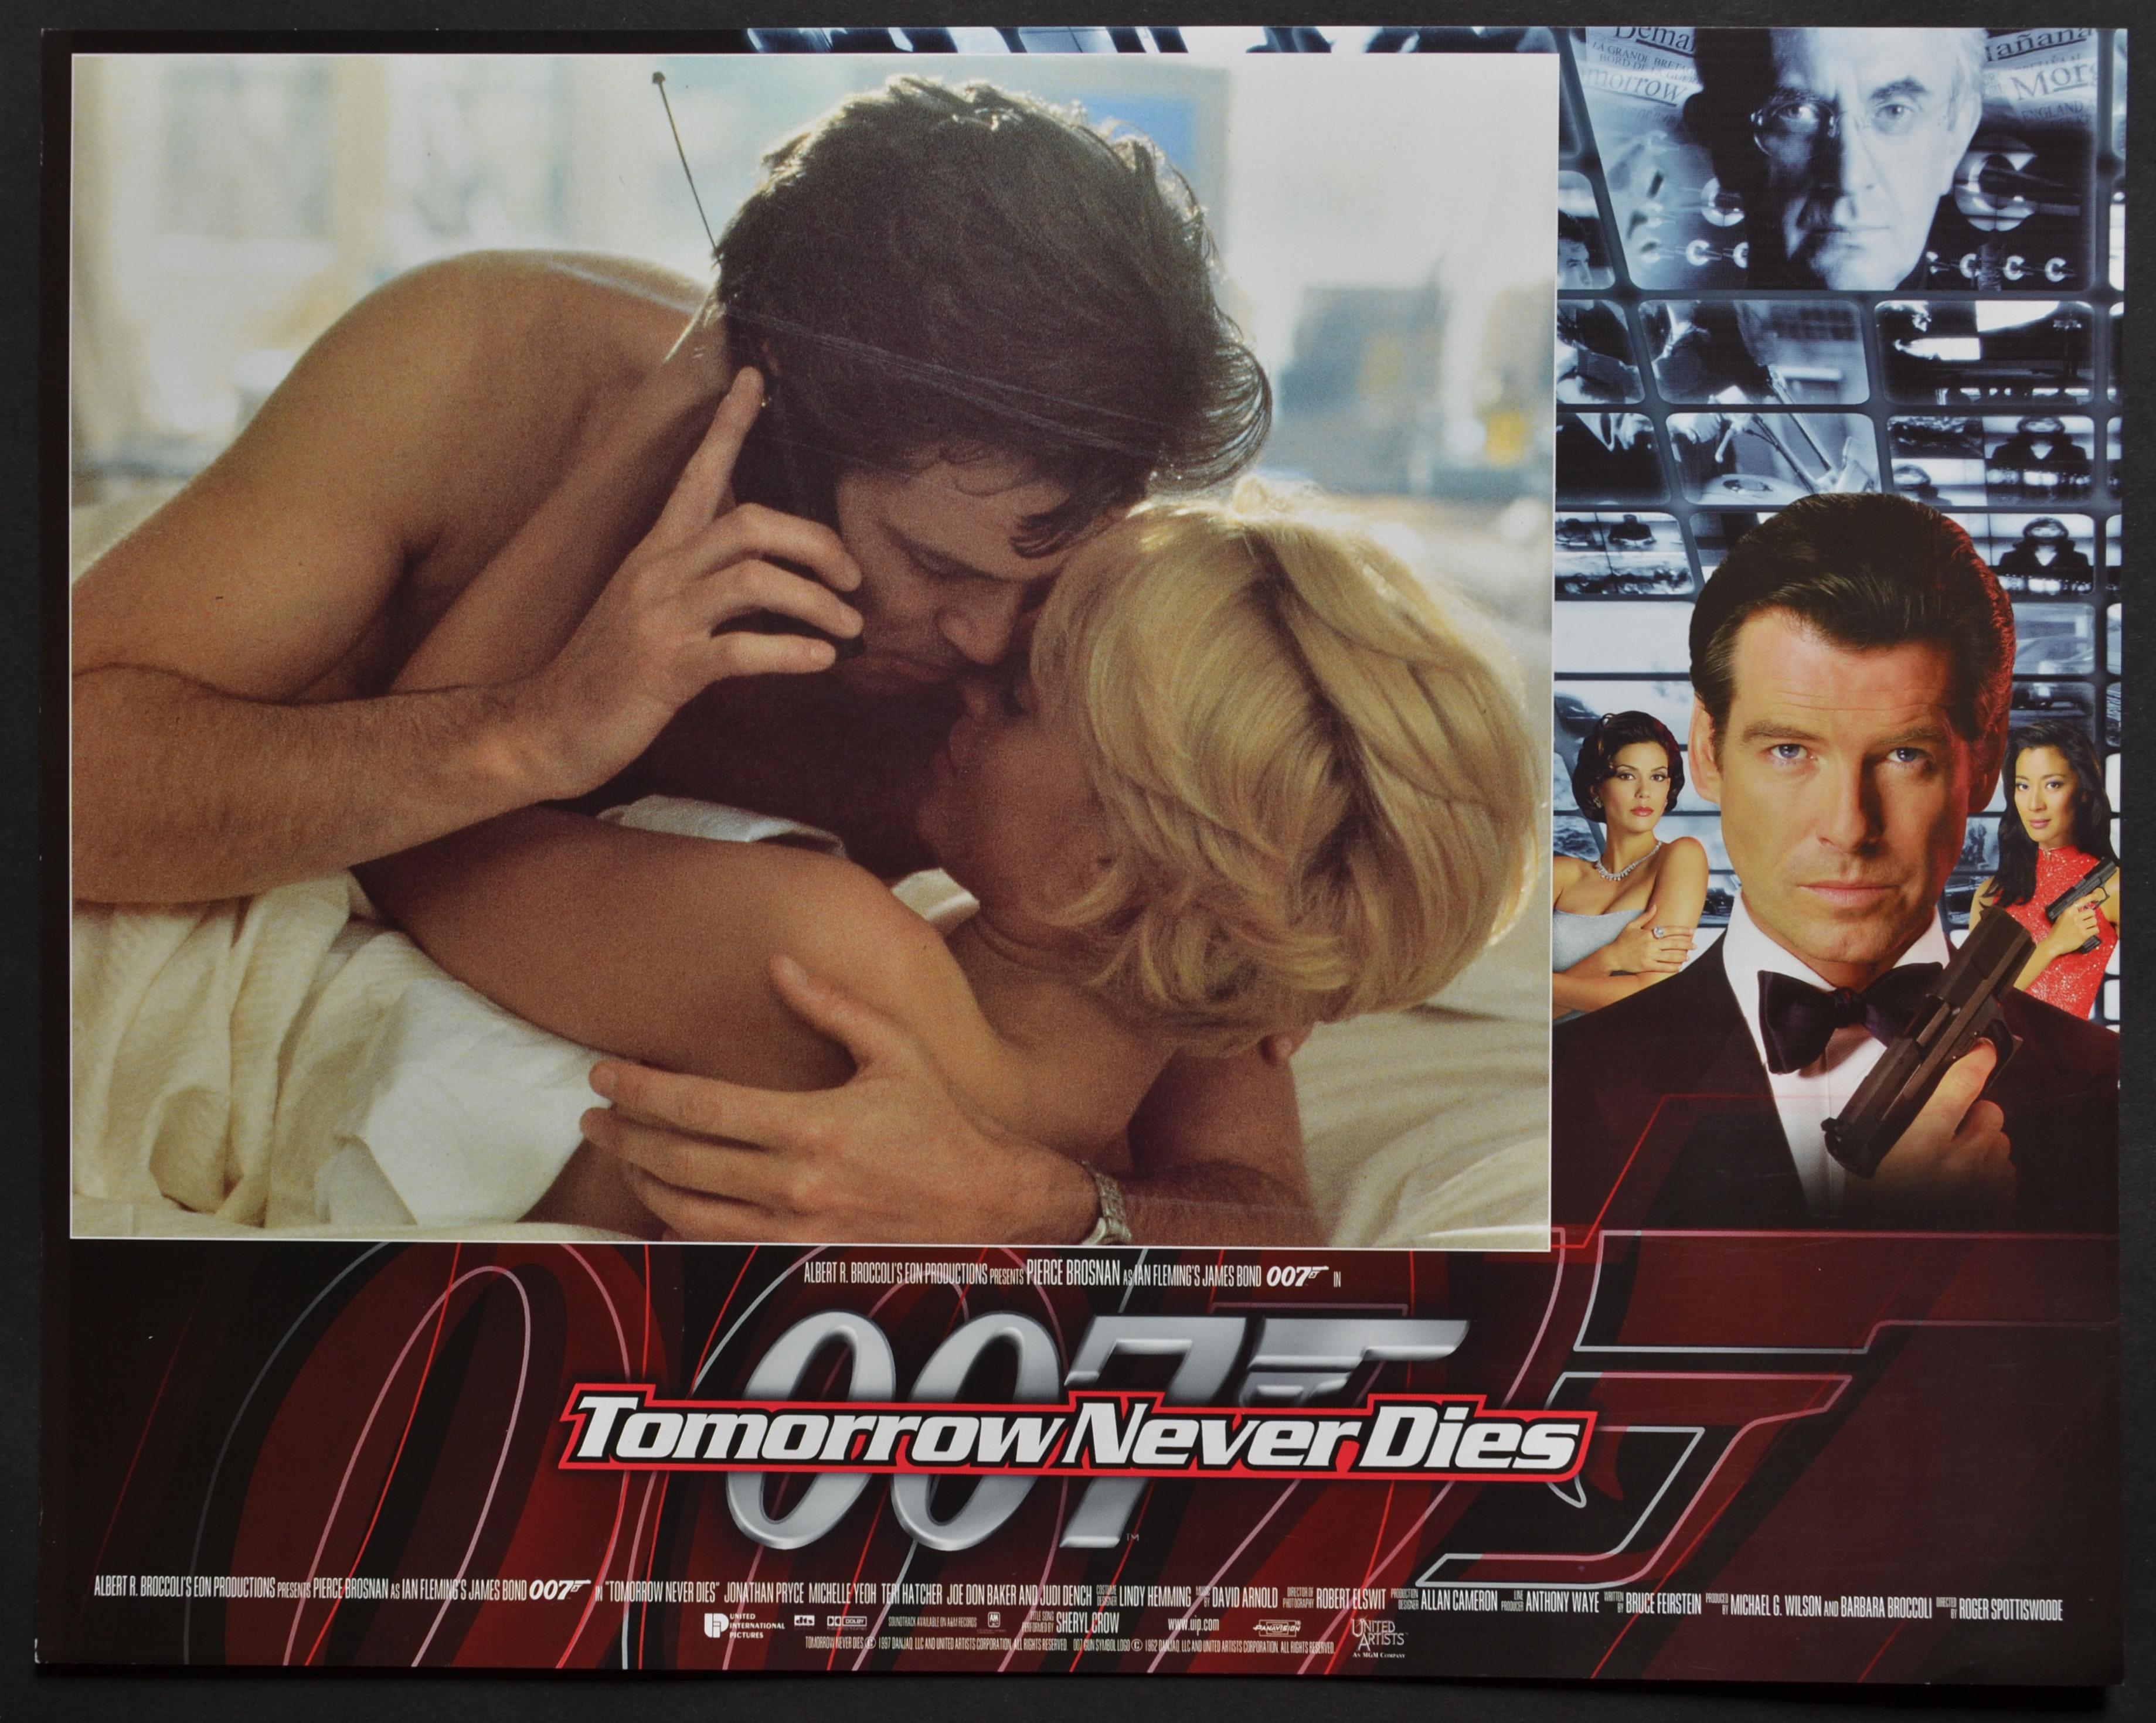 "James Bond 007 - Tomorrow never dies" Original Lobby Card, UK 1997 - Art by Unknown